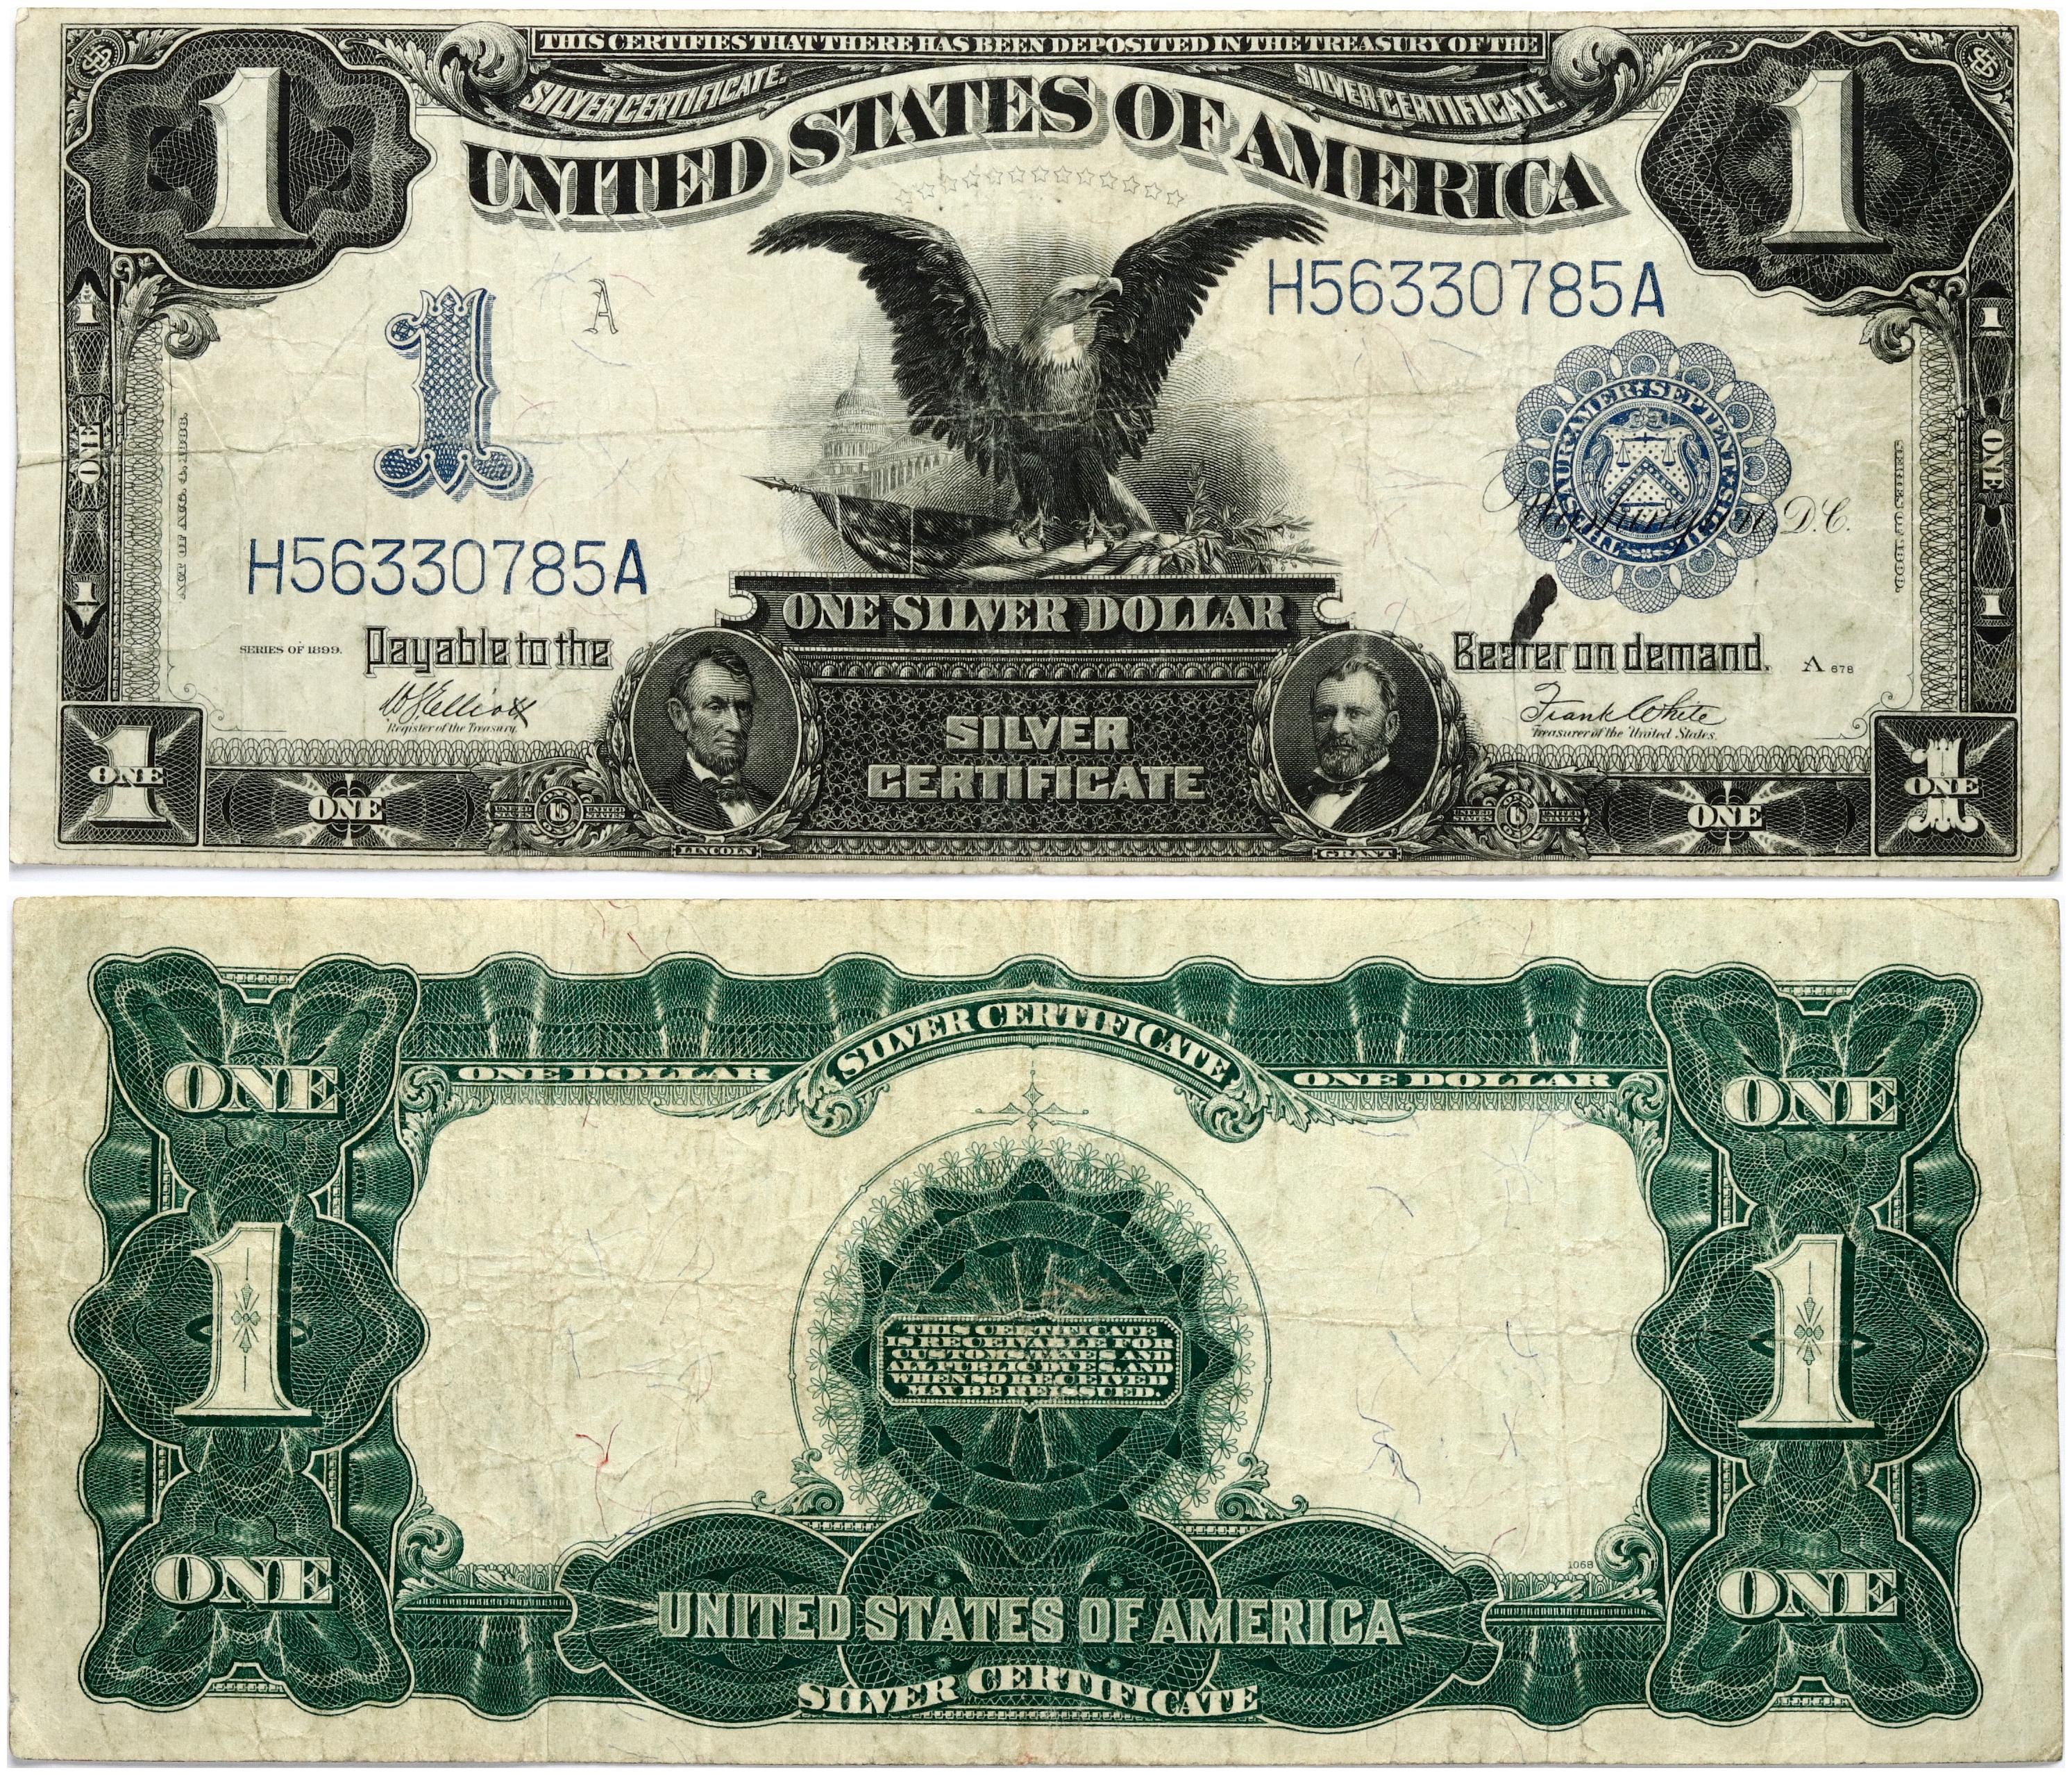 Один доллар сша банкнота. 1 Доллар США. Купюра 1 доллар США. Банкноты США 1899. 1 Доллар 1899 США банкнота.